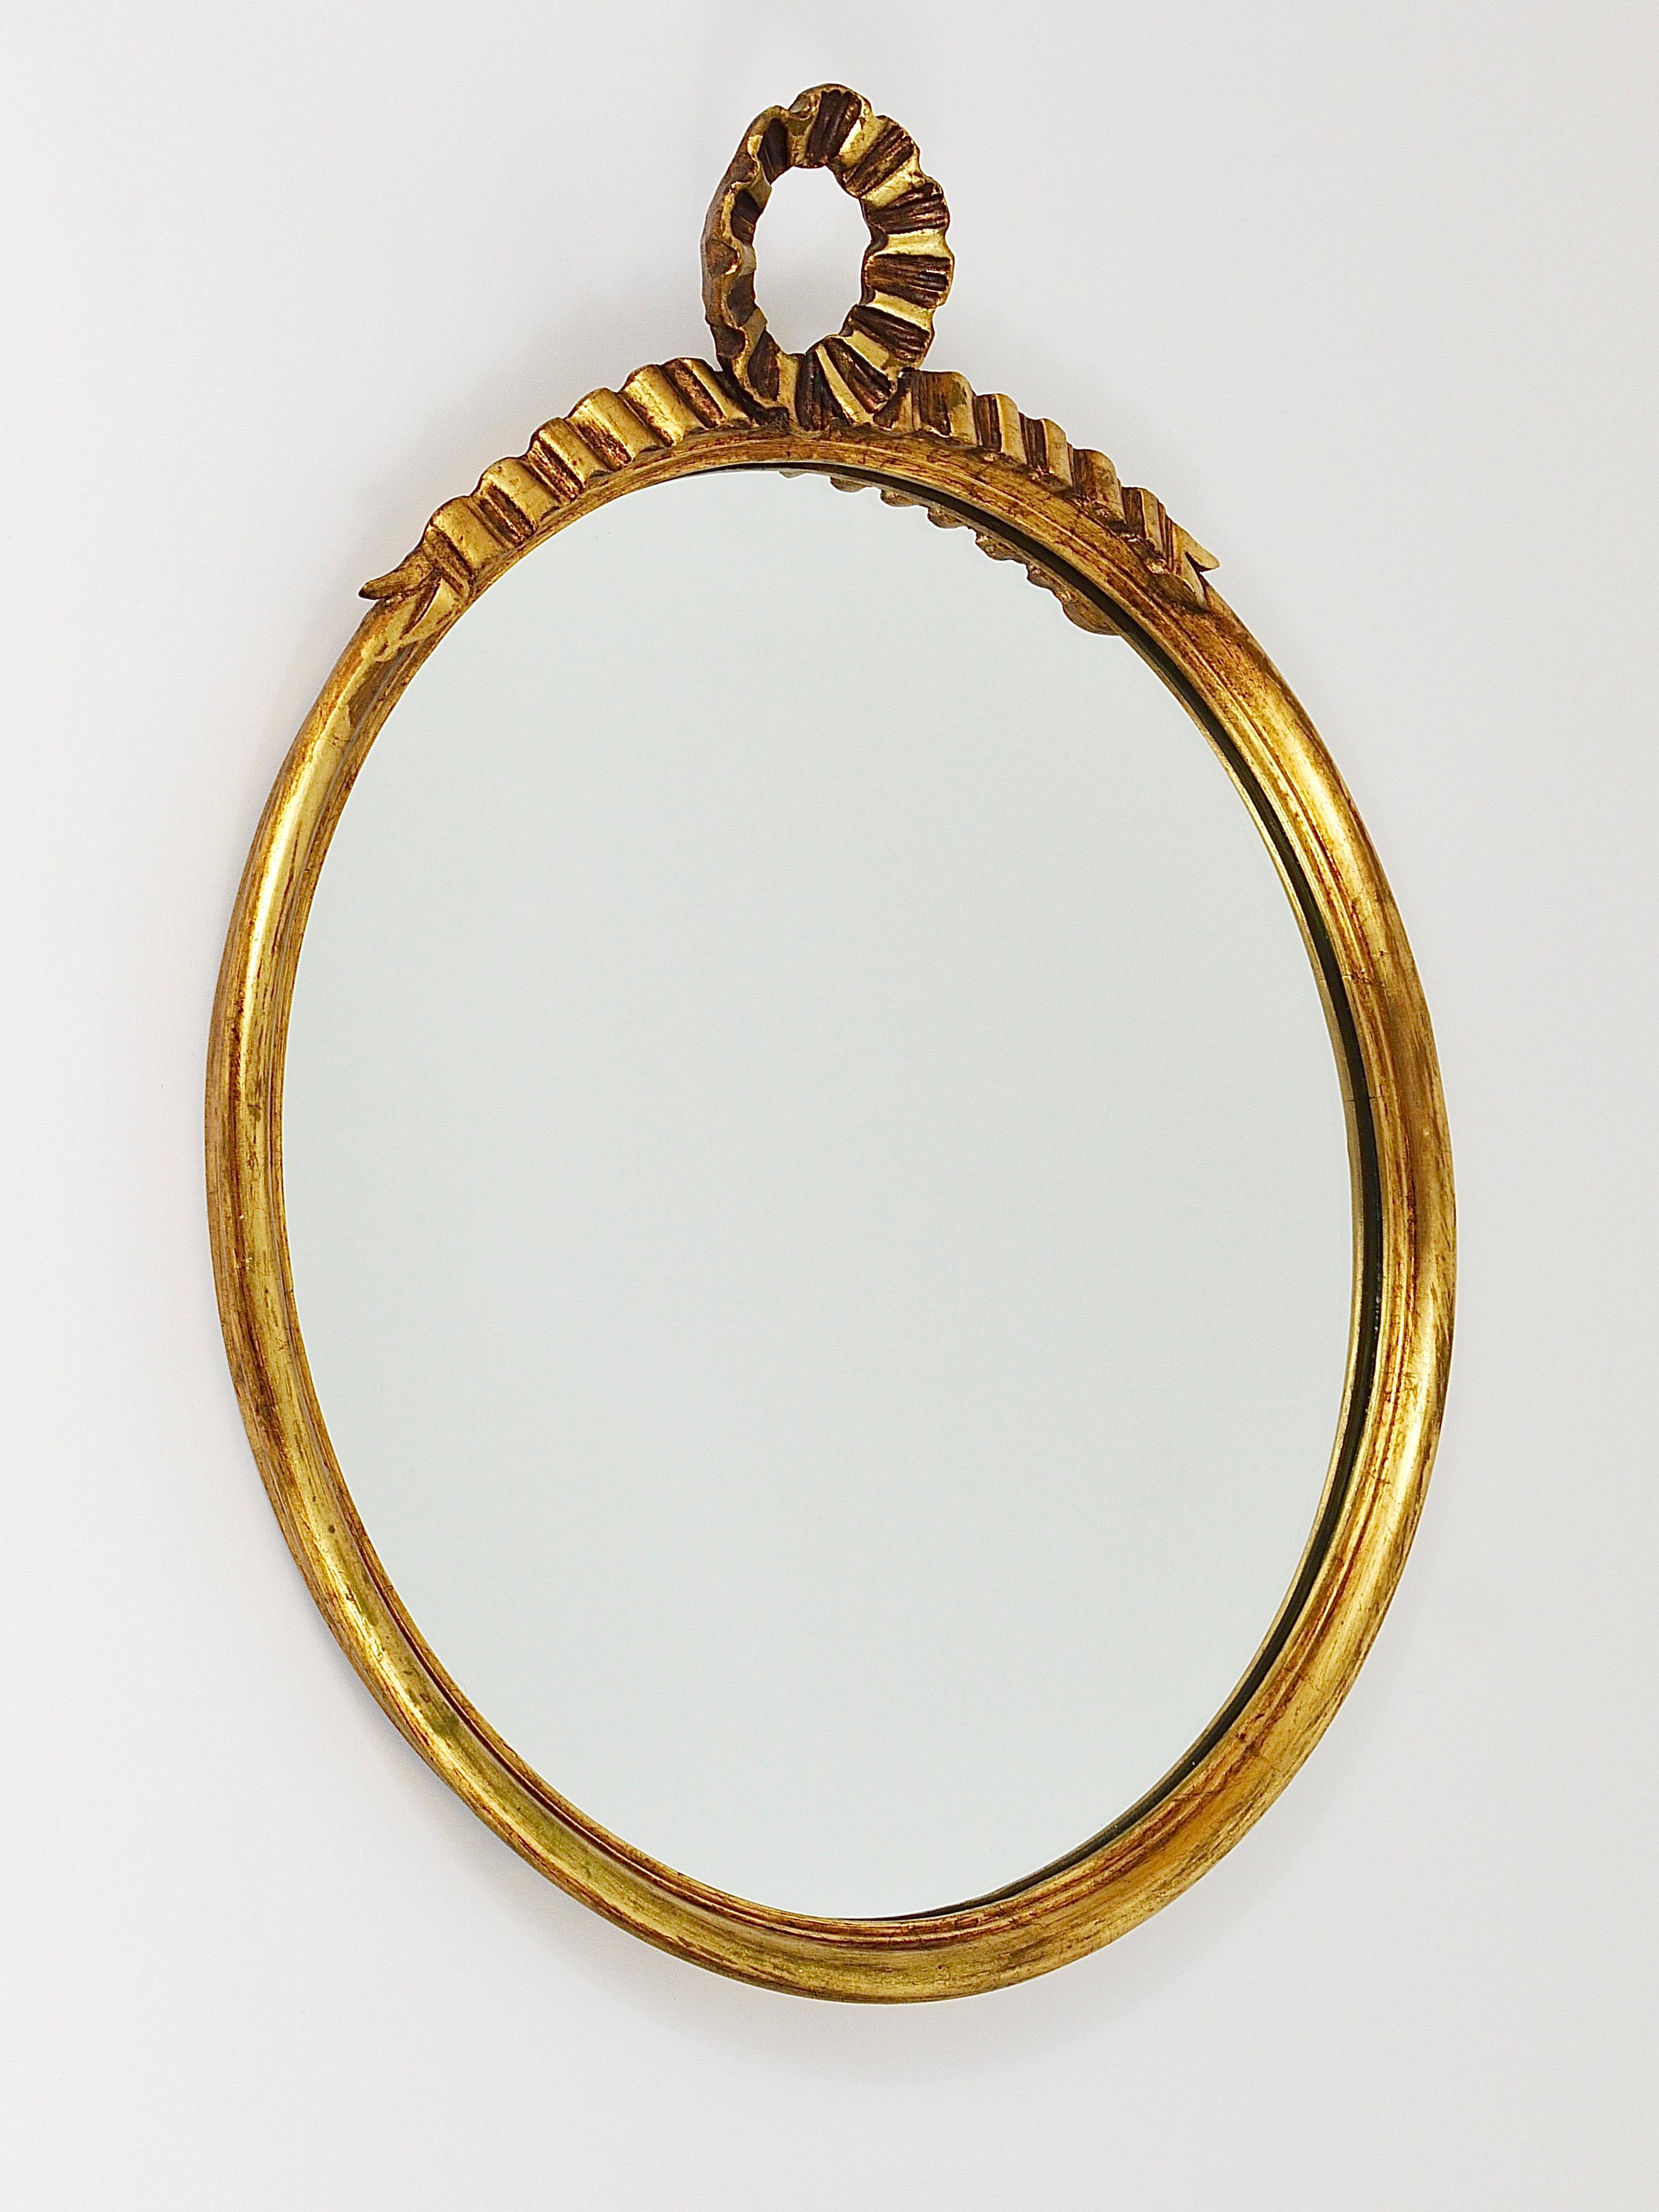 Italian Round Midcentury Gilt Wood Wall Mirror, C. Allodi & G. Subelli, Italy, 1950s For Sale